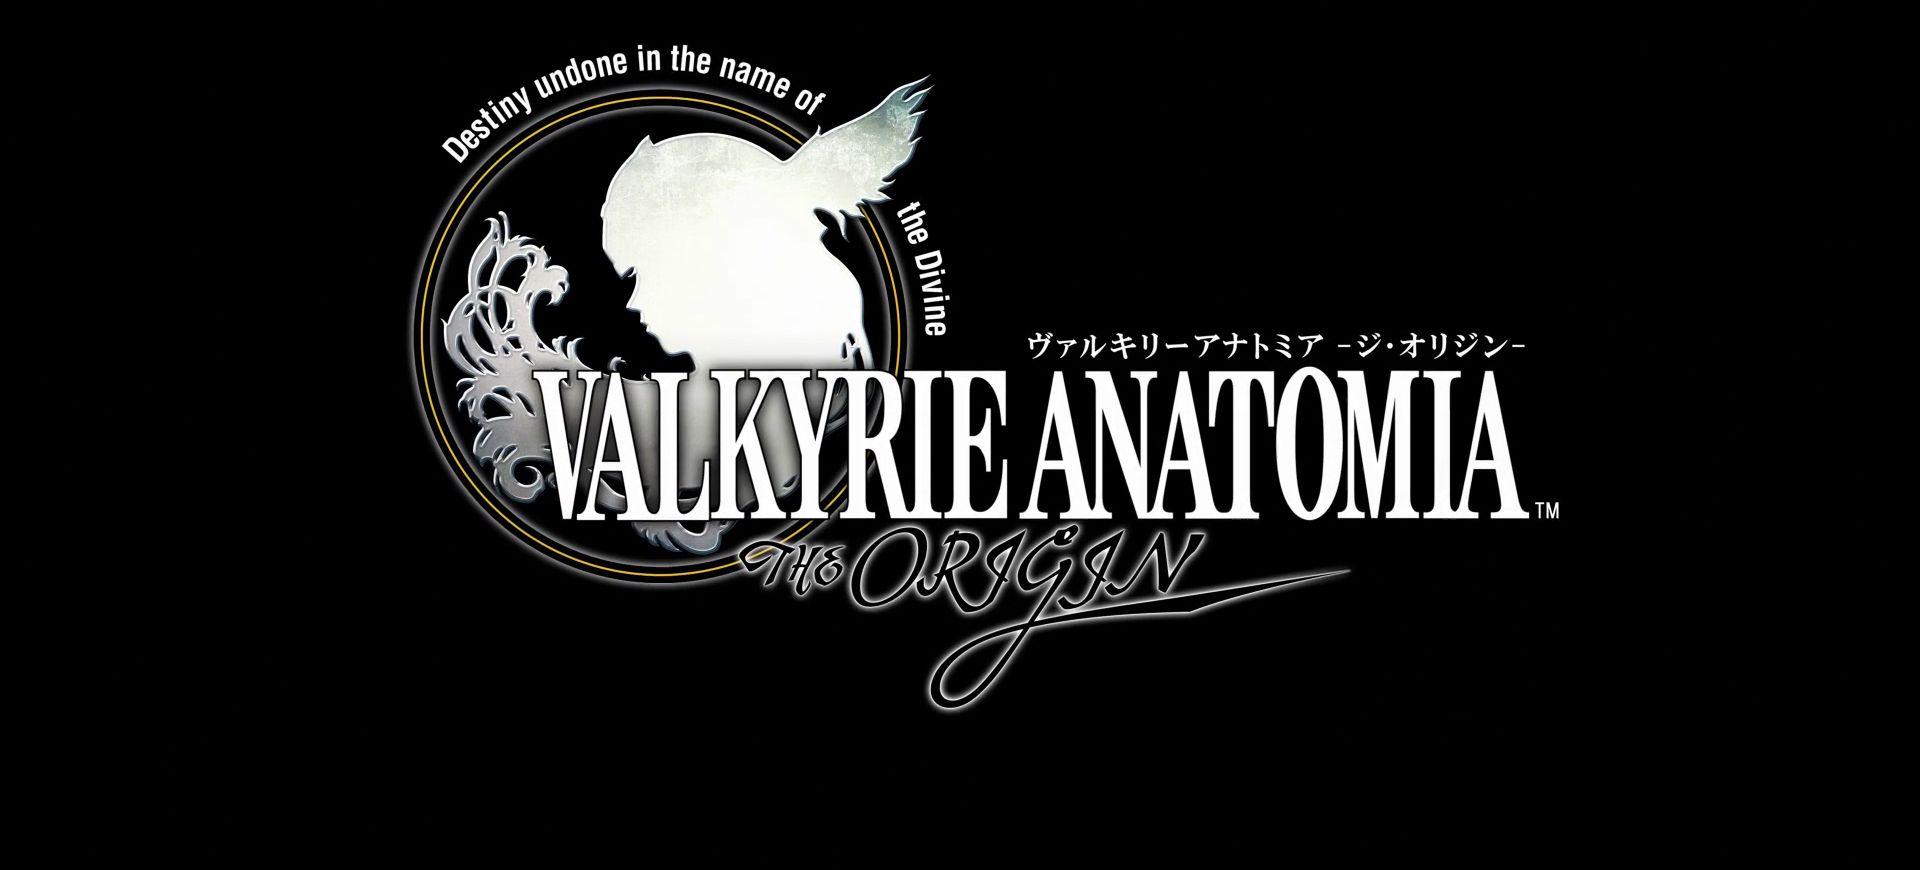 Valkyrie Anatomia: The Origin tung trailer đầu tiên - Tin Game Mobile